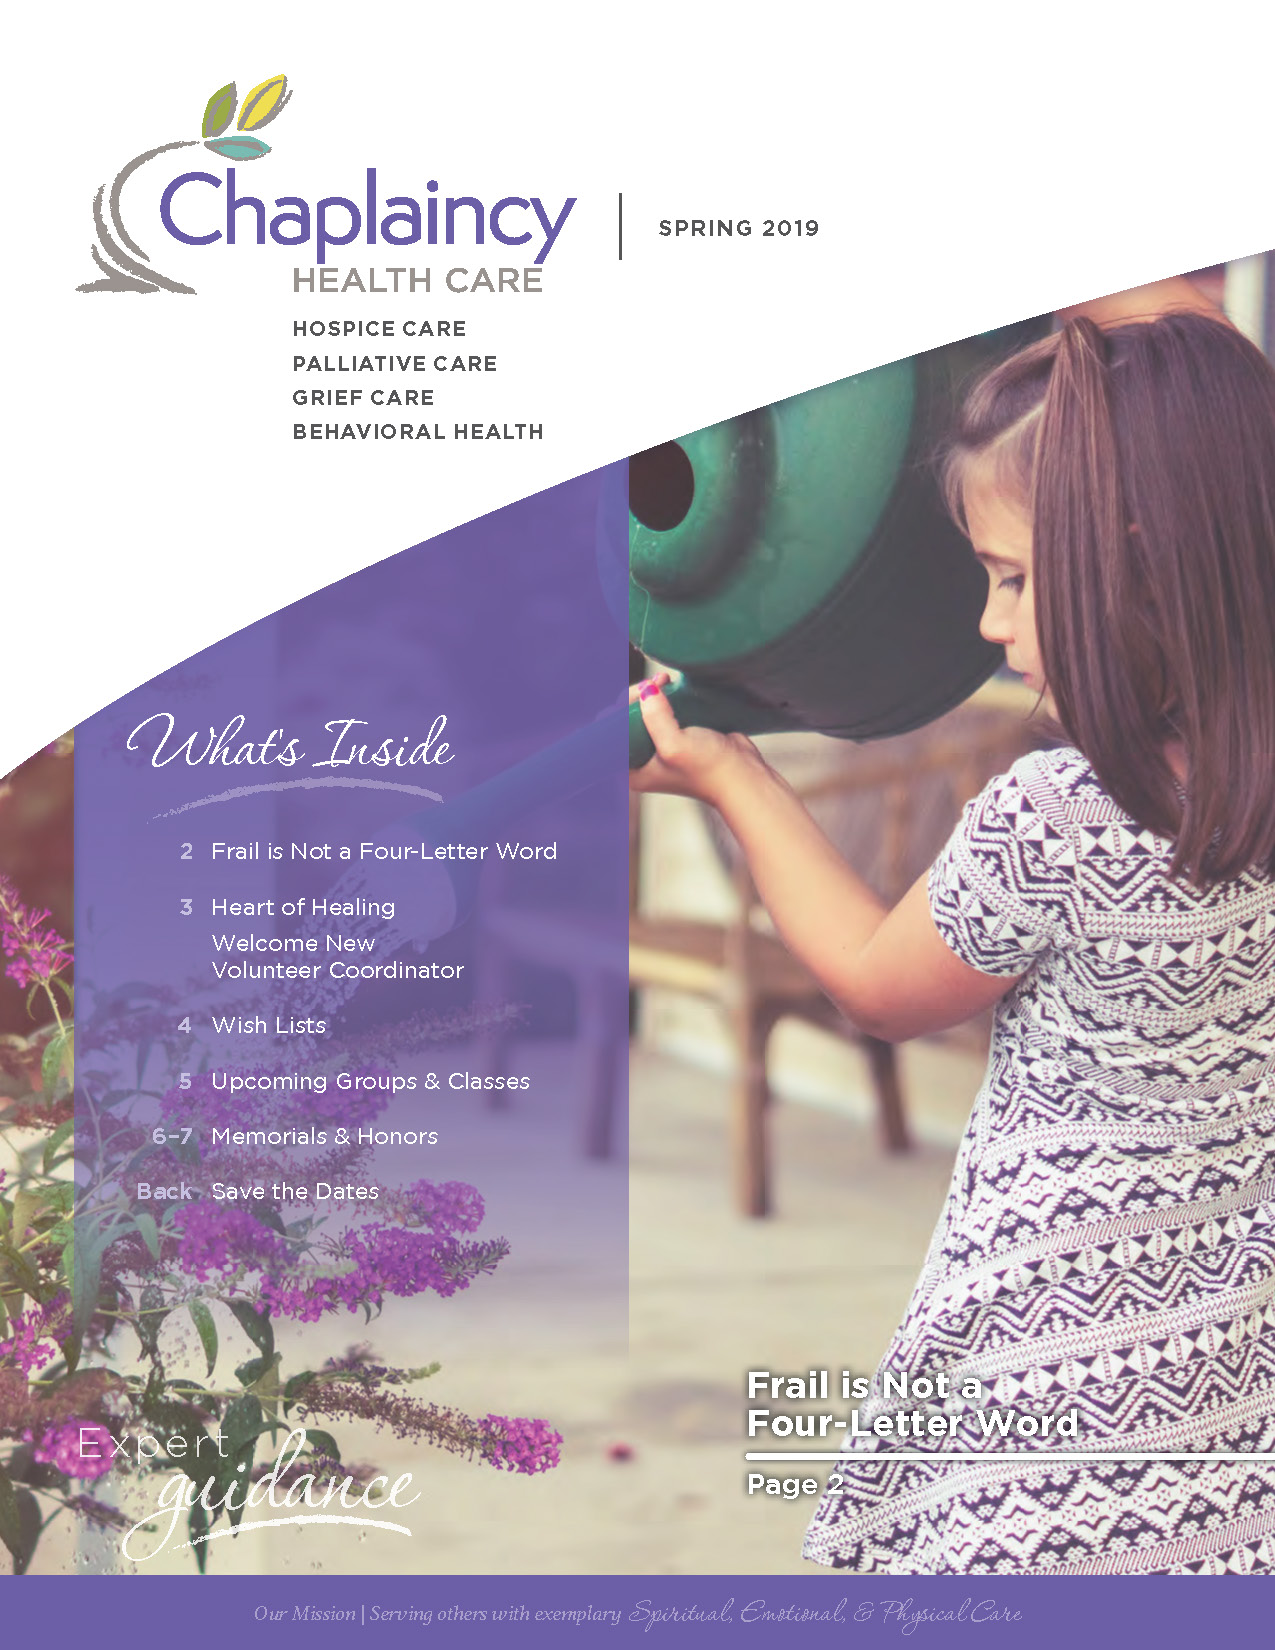 Chaplaincy Health Care Spring 2019 Newsletter